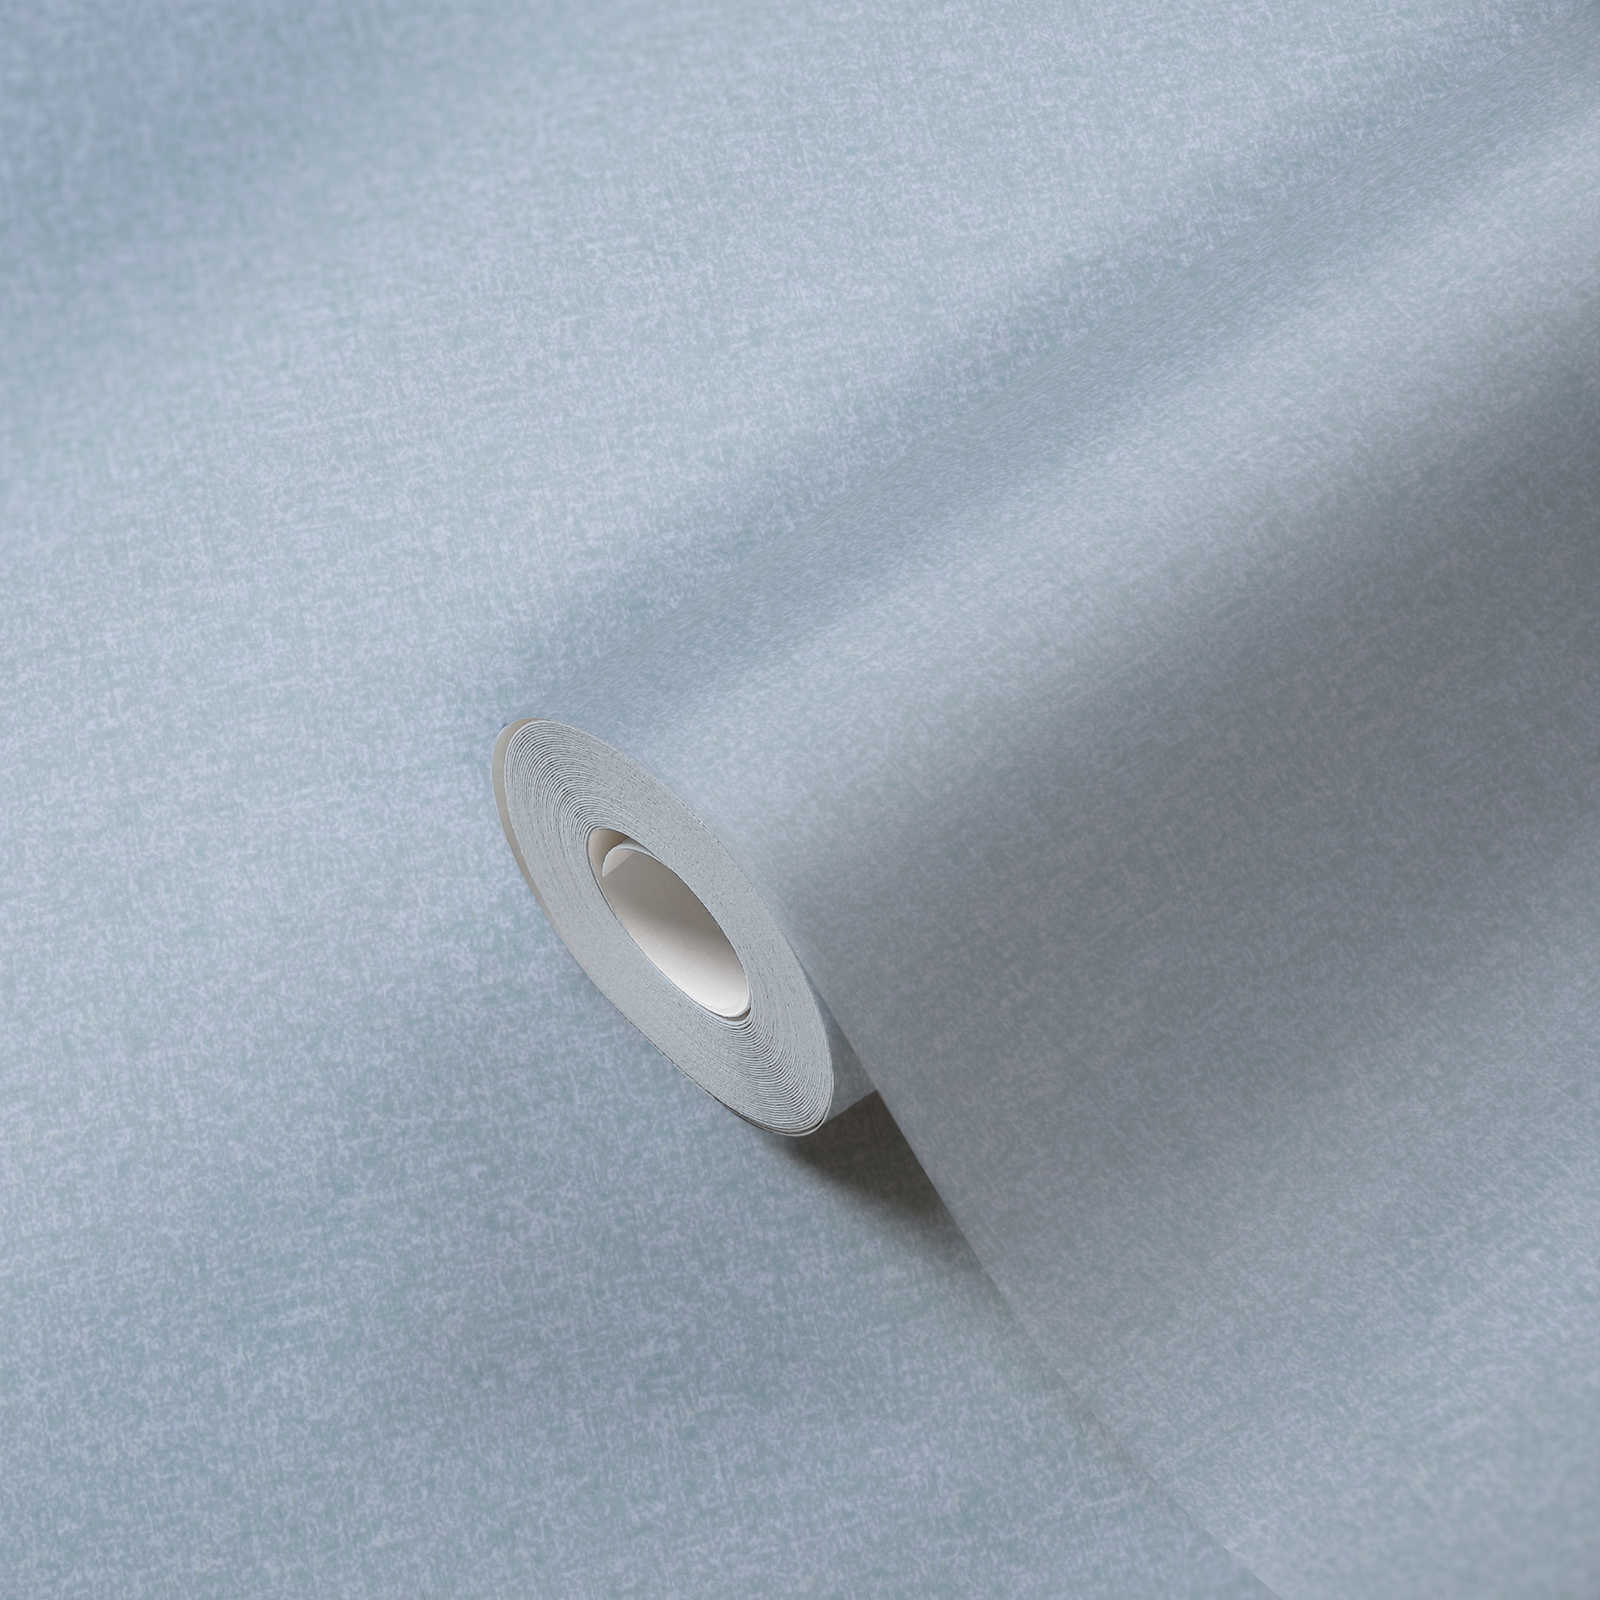             Non-woven wallpaper with textured pattern plain - light blue
        